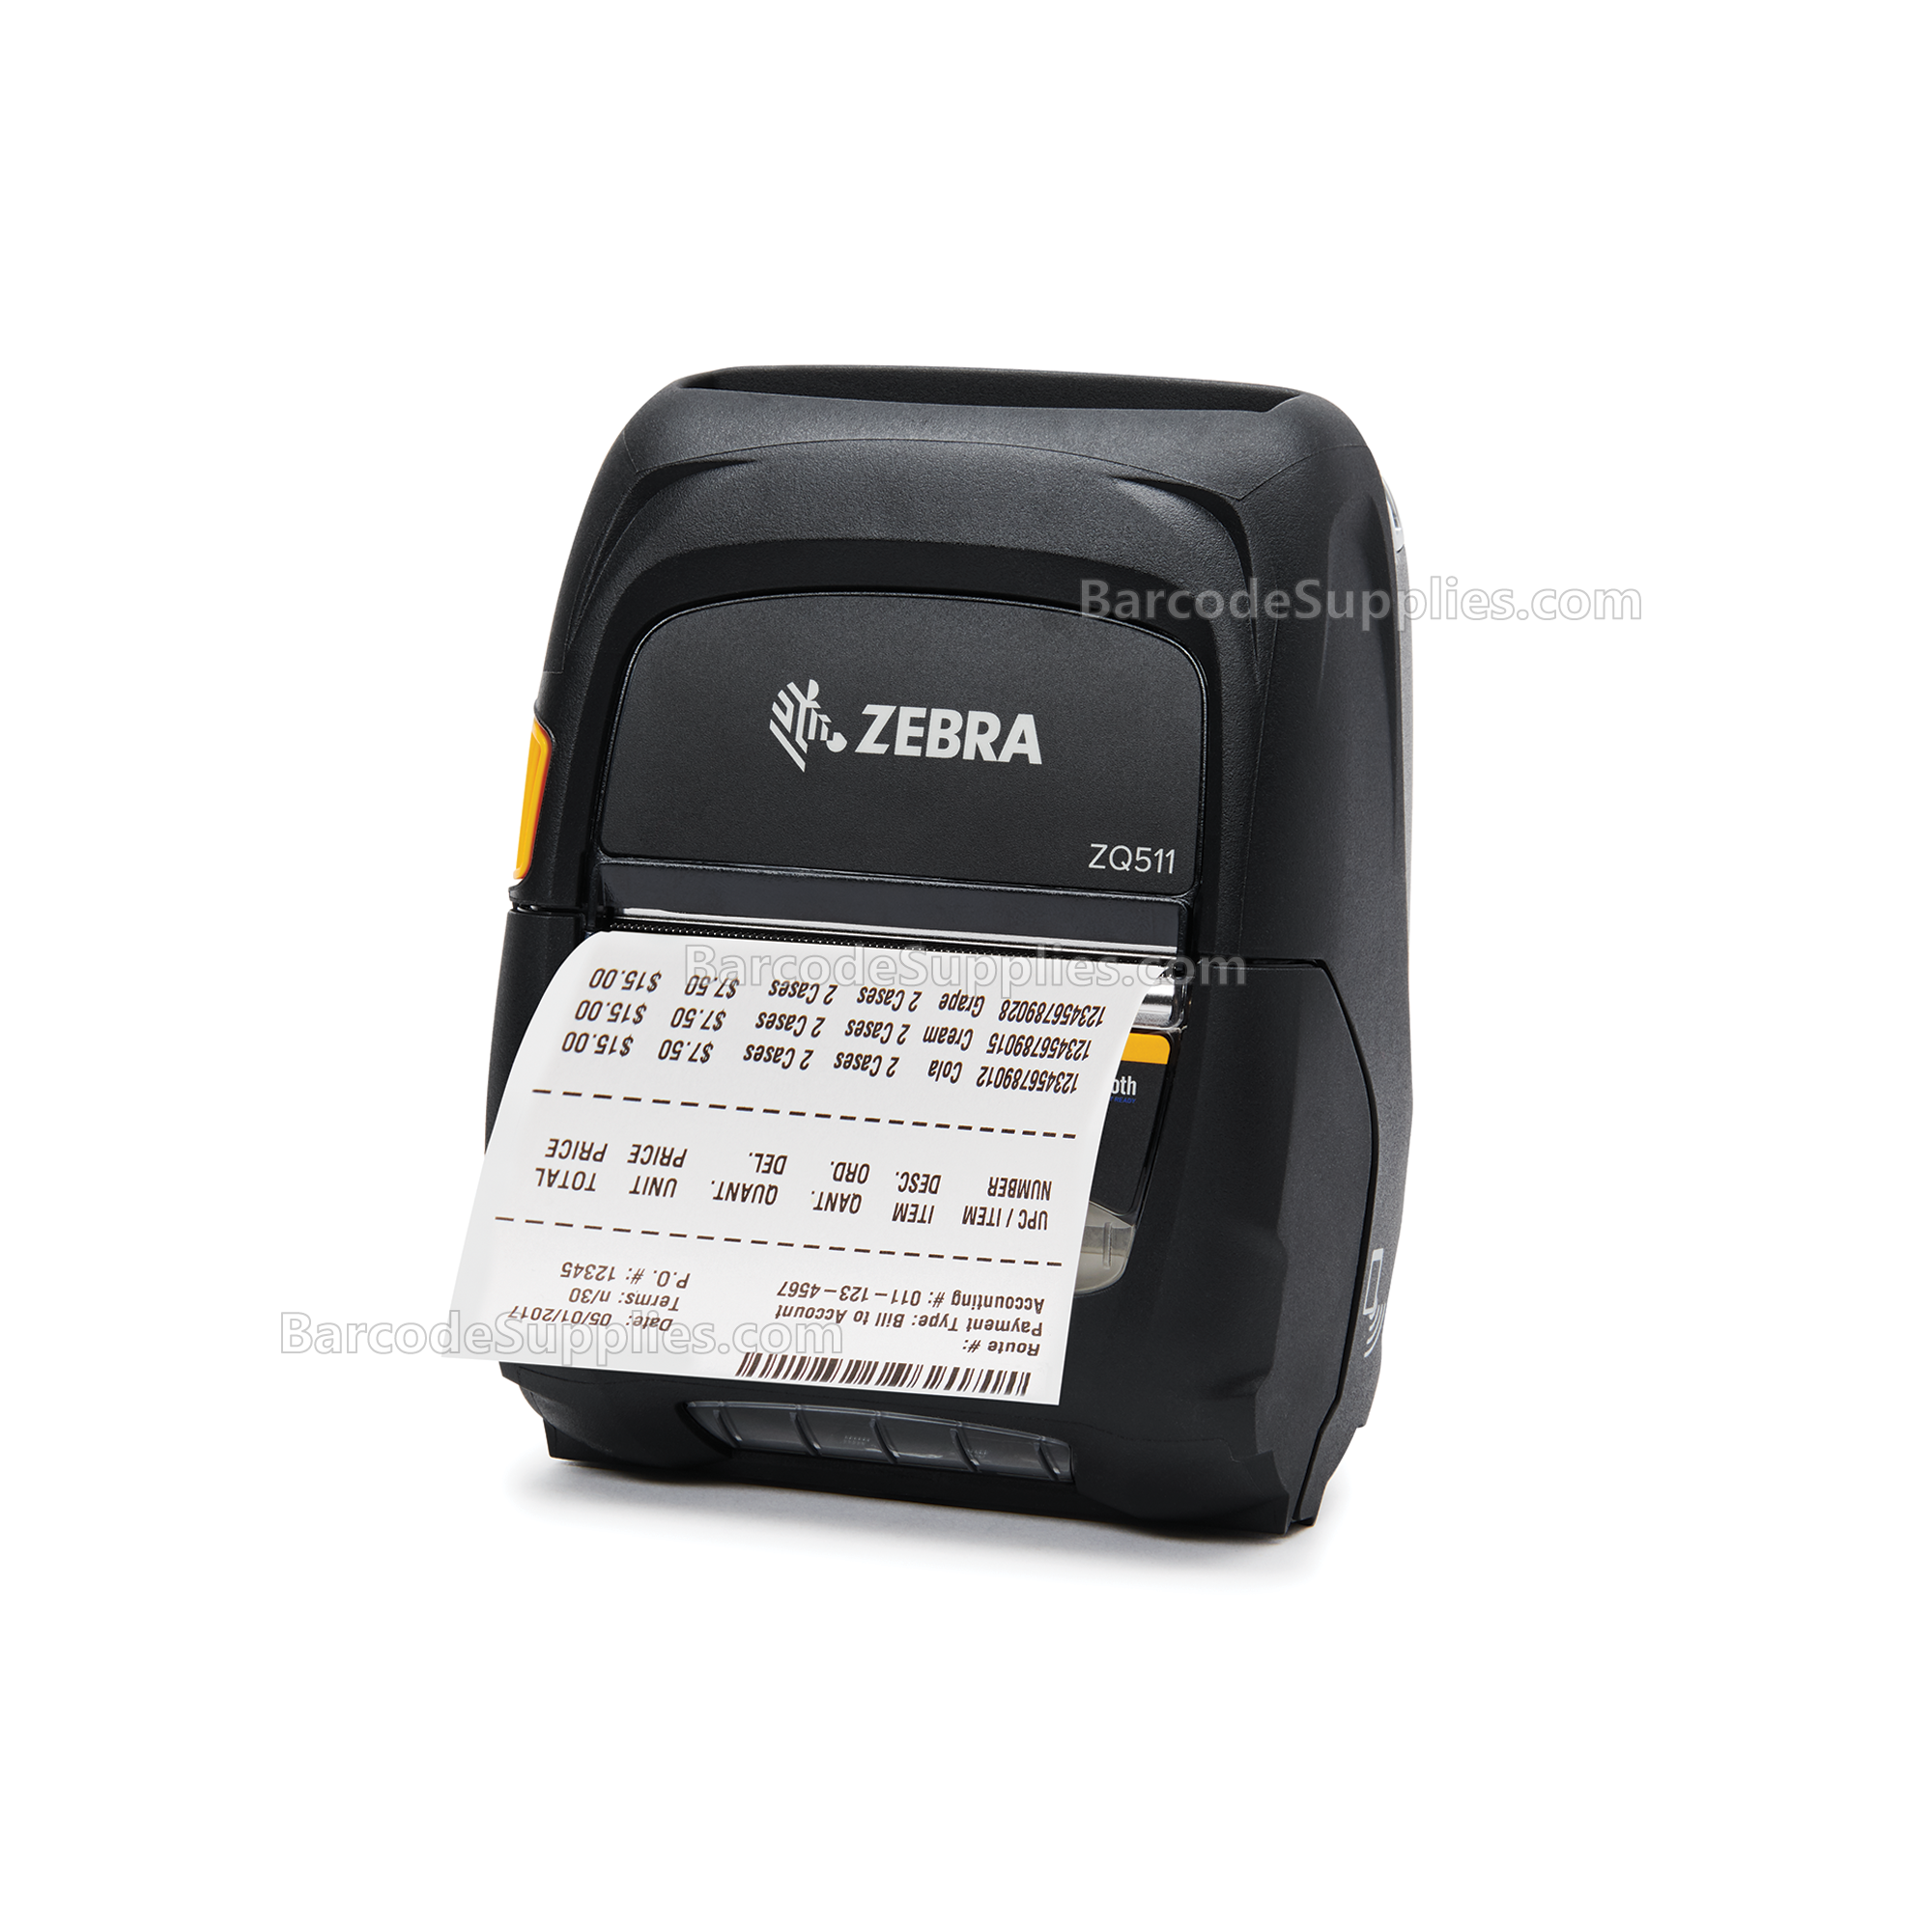 Zebra ZQ511 Mobile Printer - media width 3.15/80mm; English/Latin fonts, Bluetooth 4.1, stnd battery, US/Canada certs - MPN: ZQ51-BUE0000-00